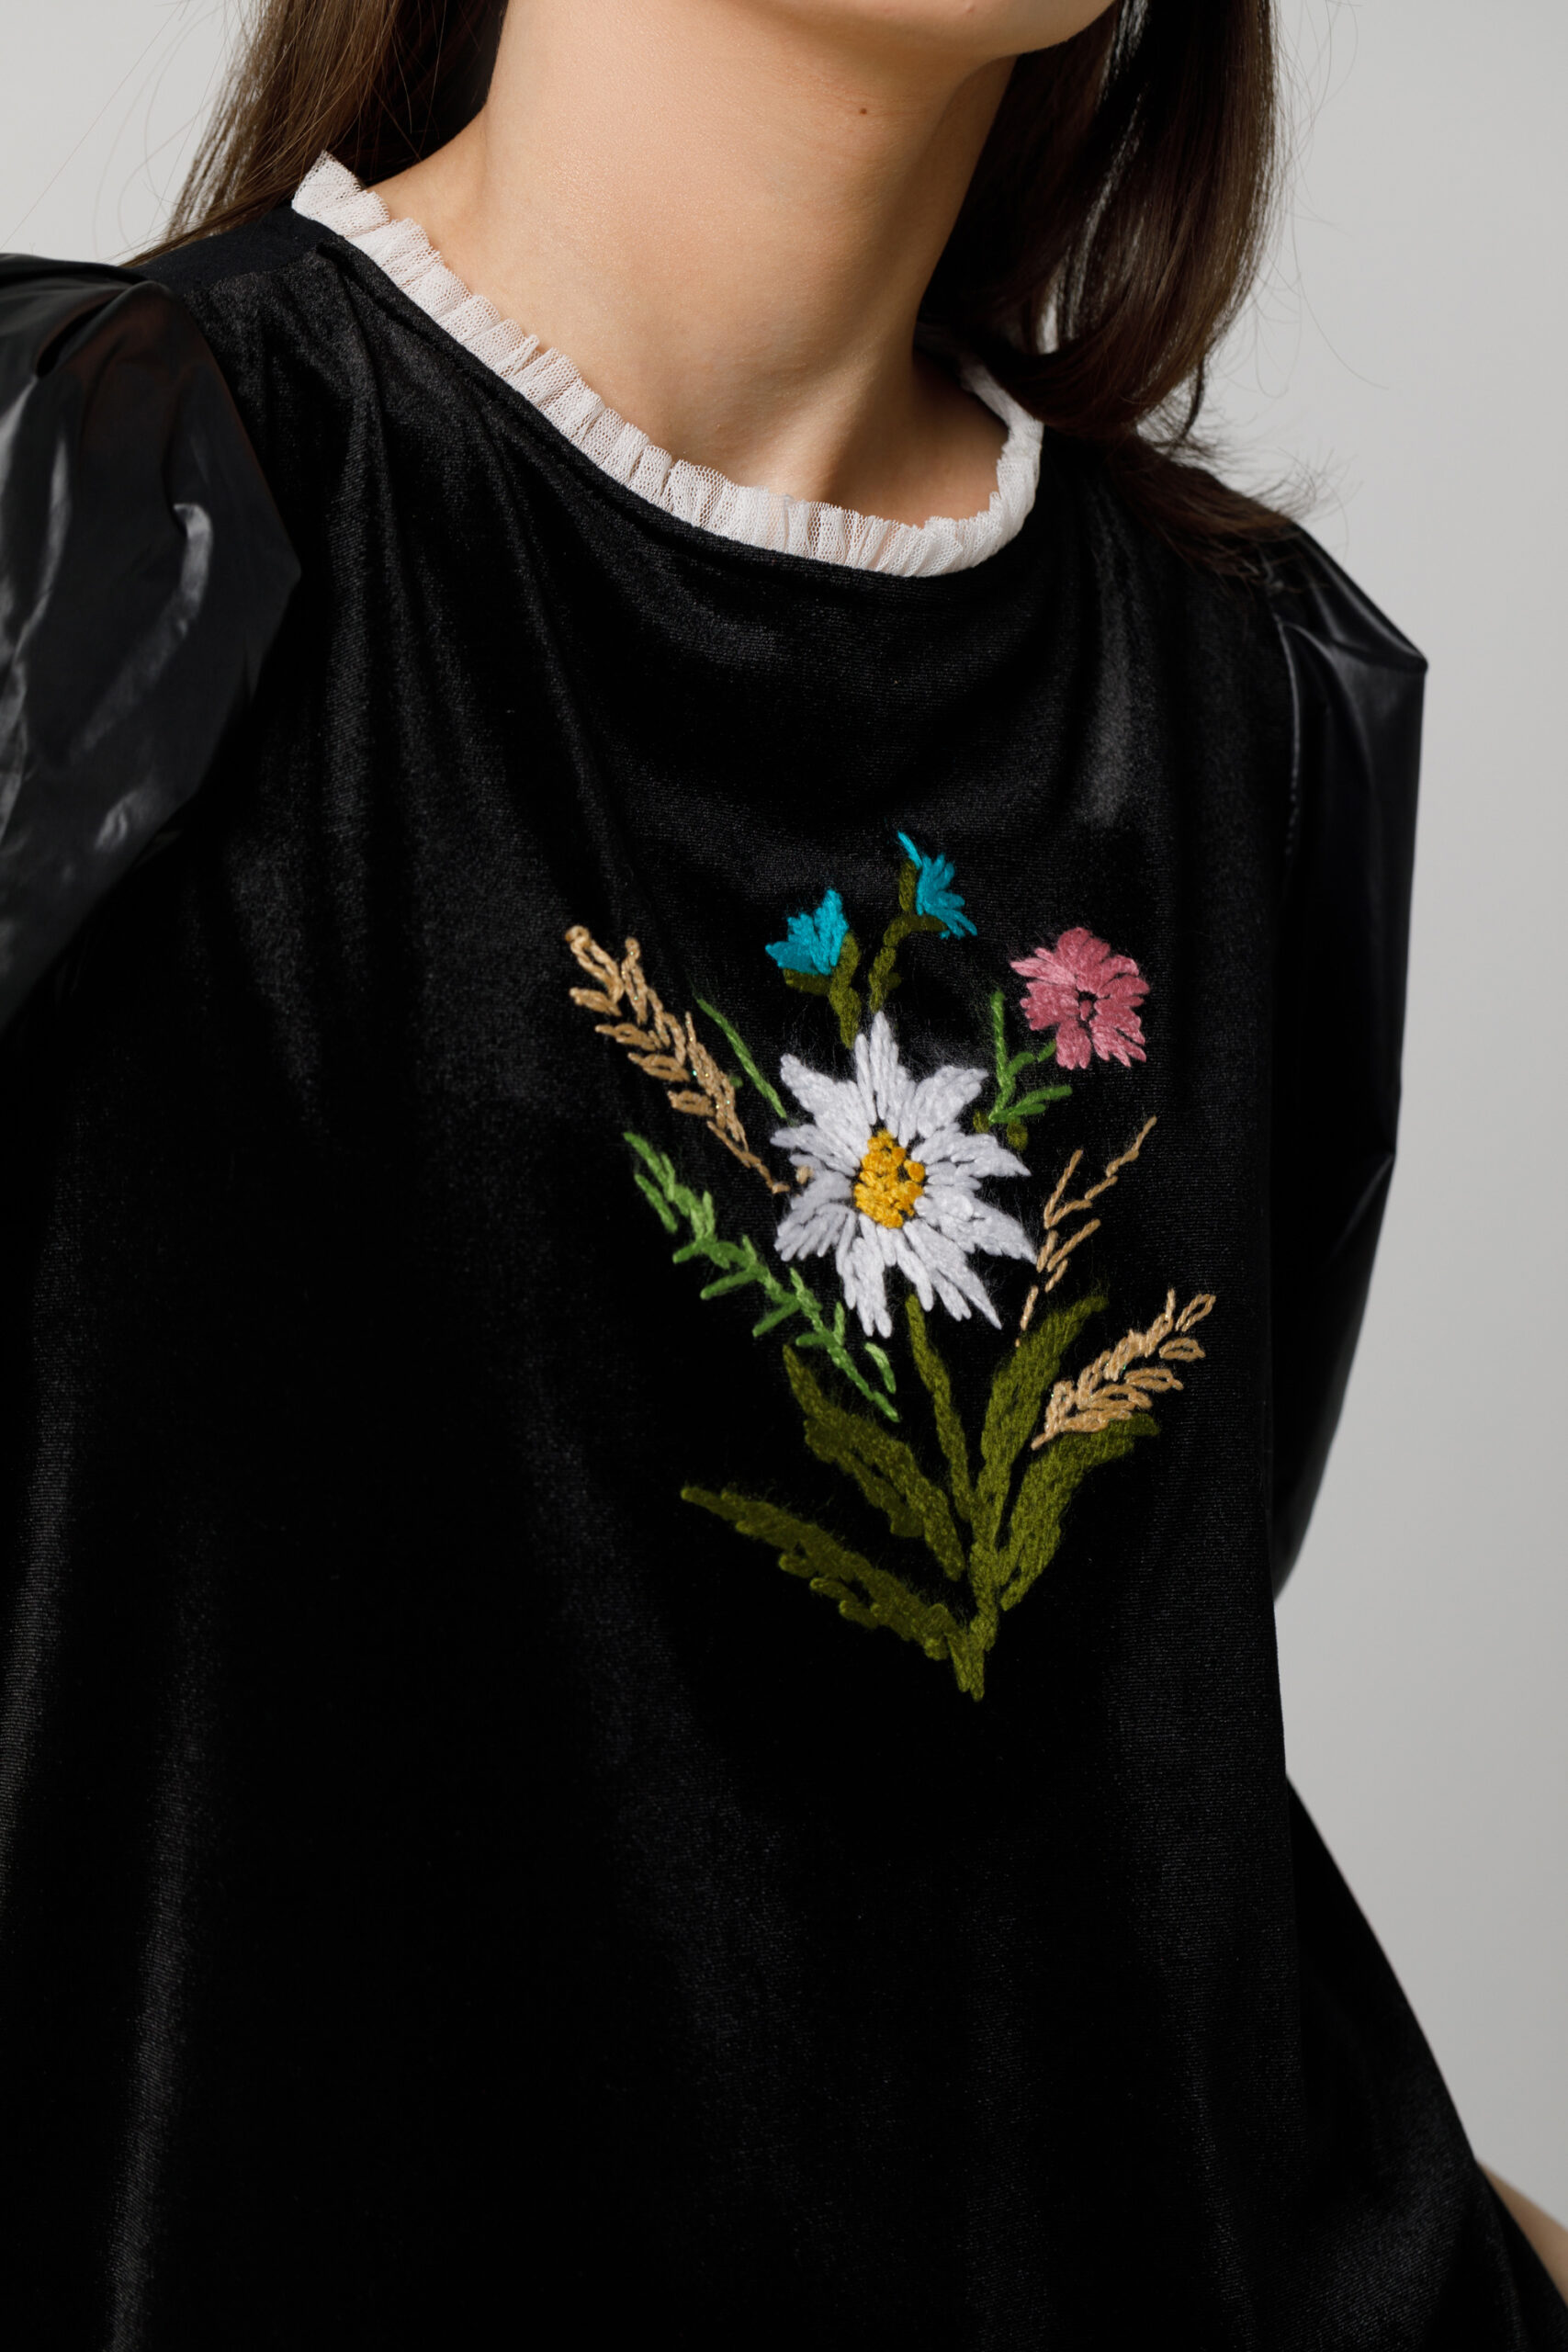 Analia asymmetrical blouse with white lace border. Natural fabrics, original design, handmade embroidery